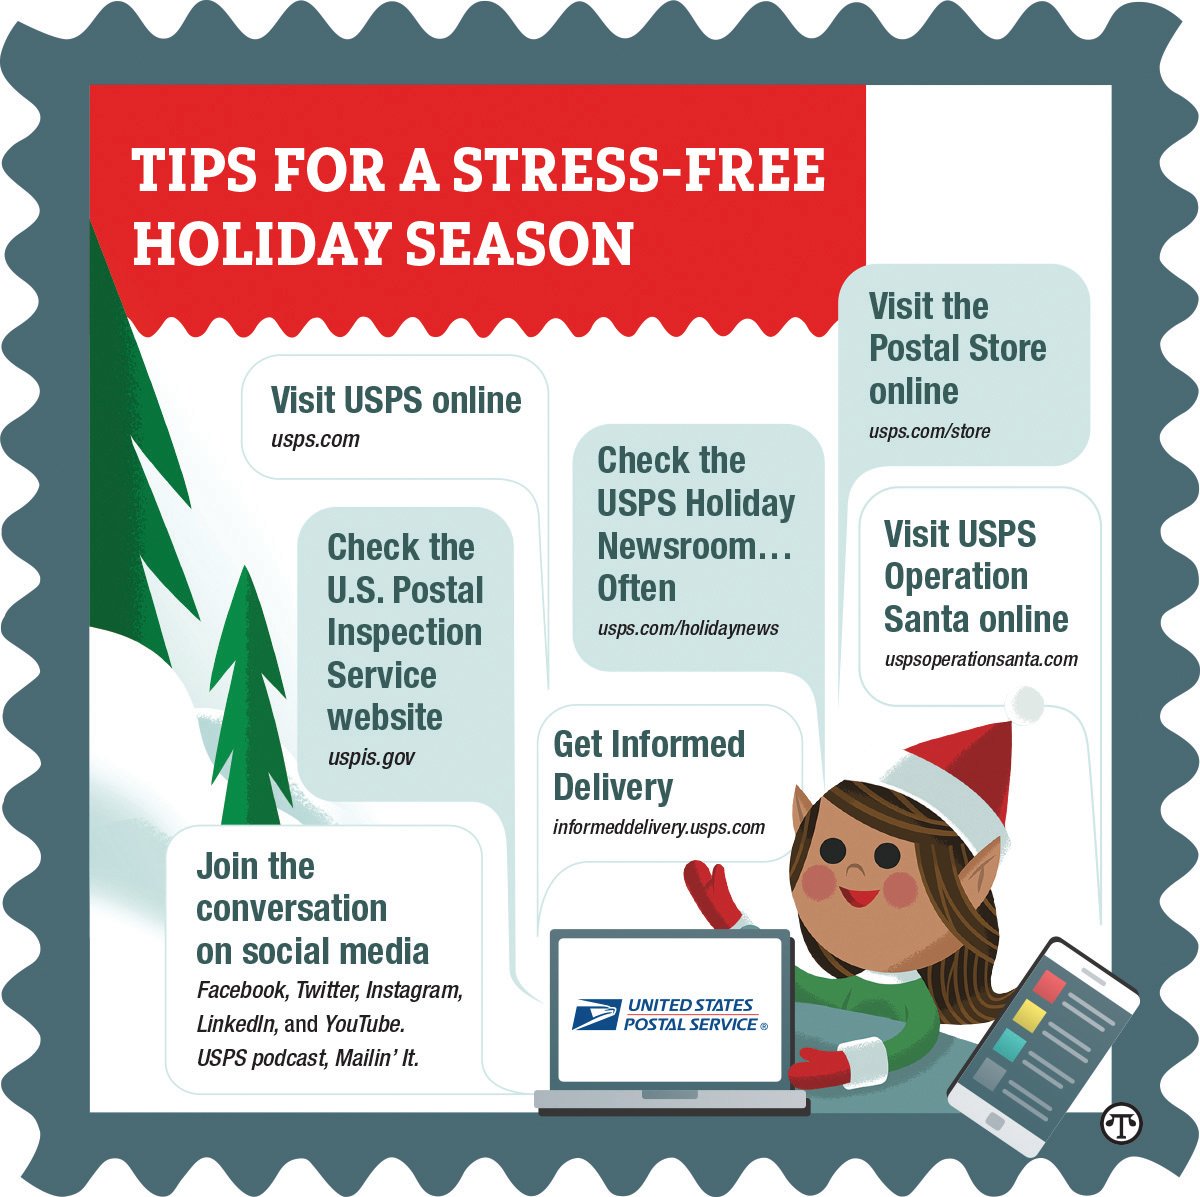 Tips for a Stress-Free Holiday Season